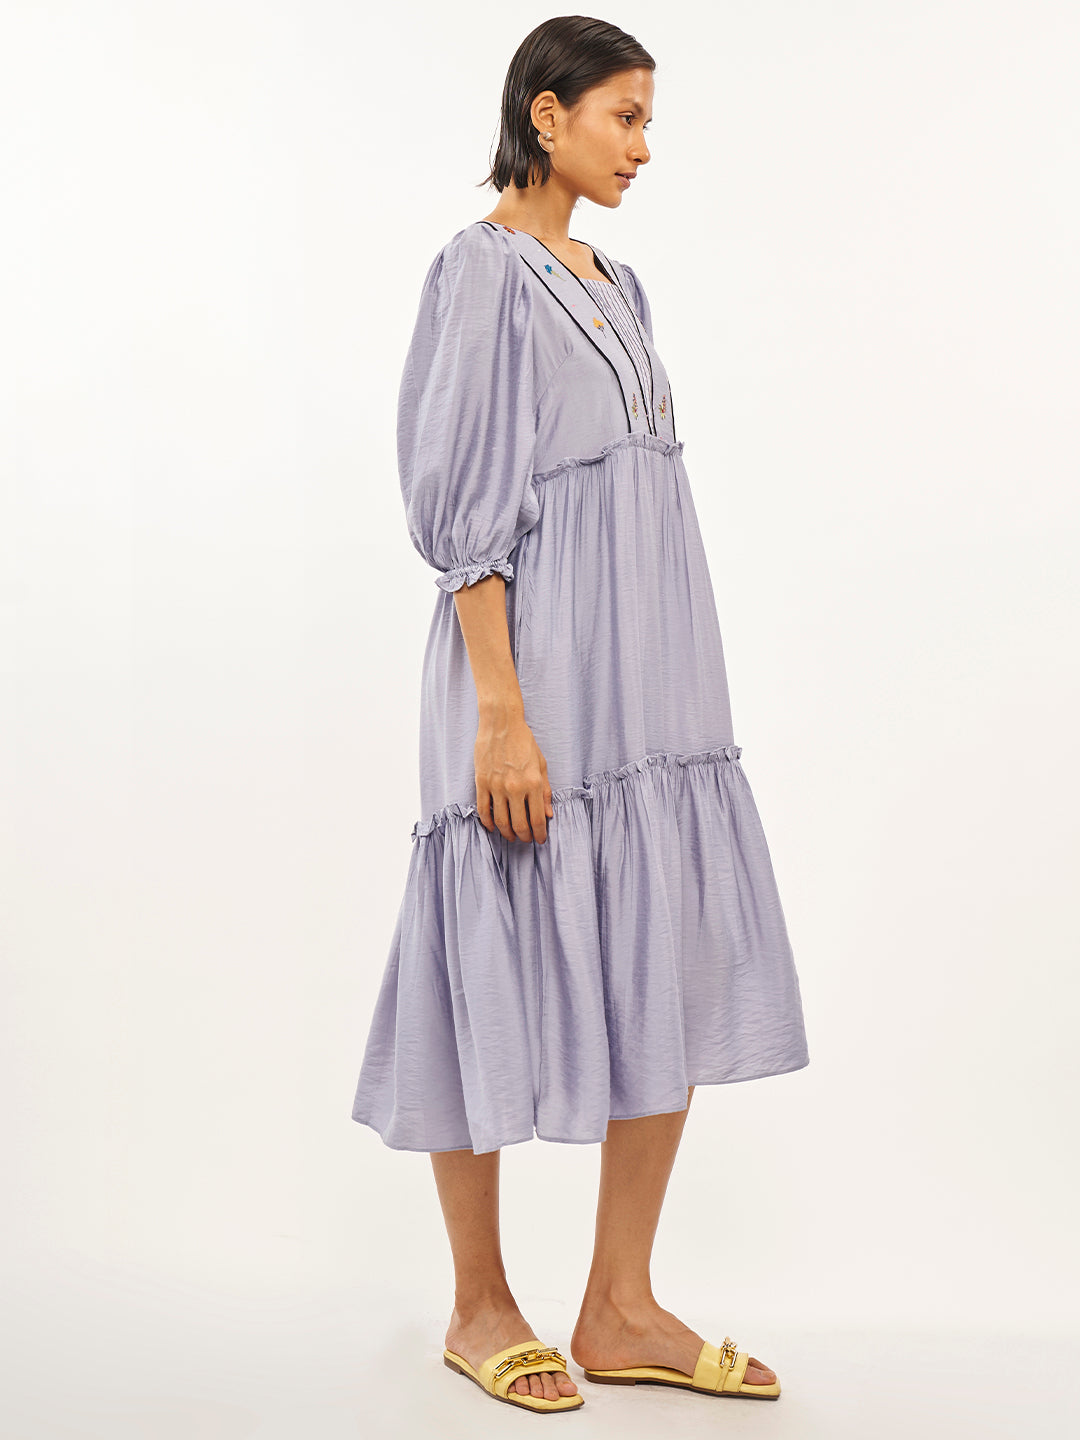 Lavender Tiered Dress - ARH145